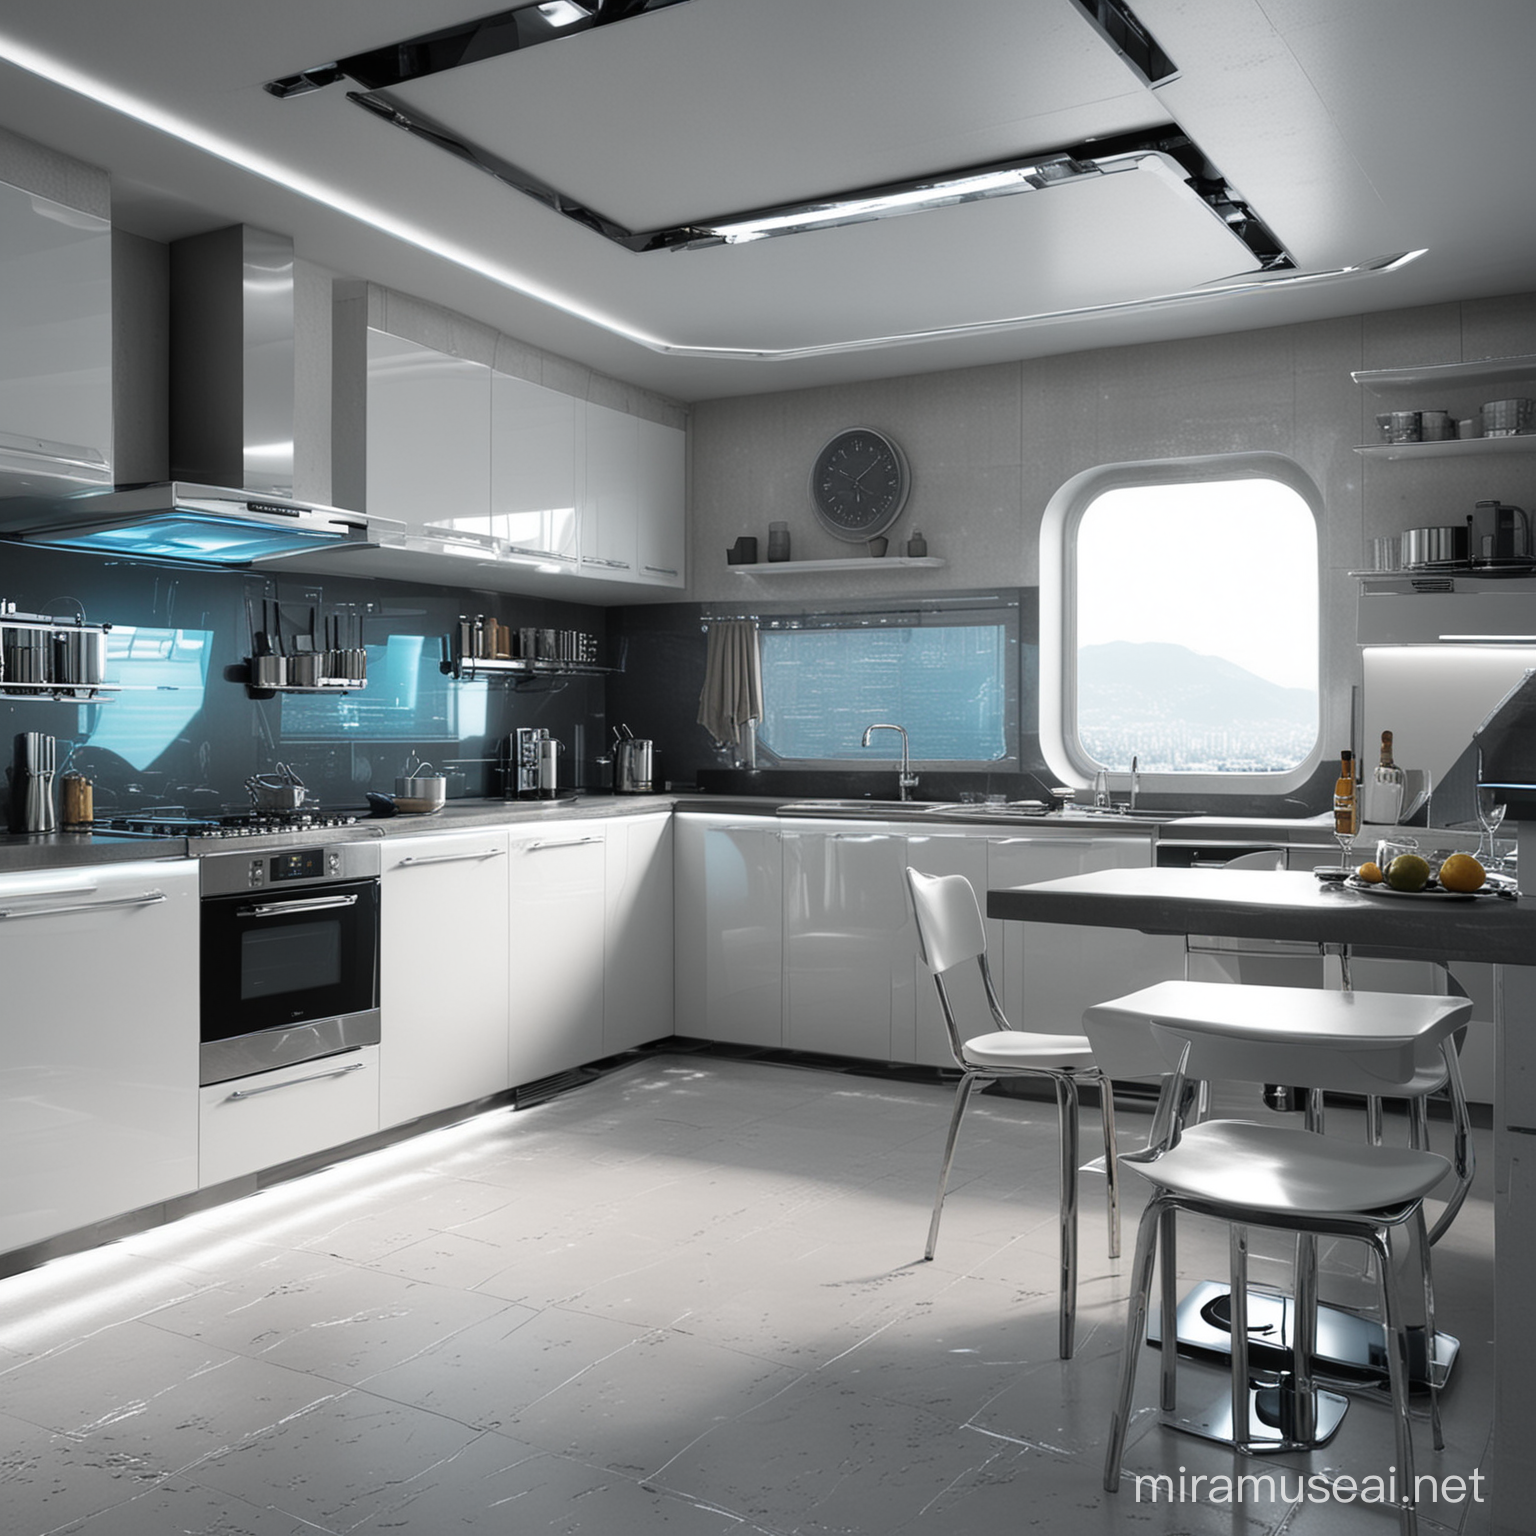 Futuristic Kitchen Interior with Modern Design